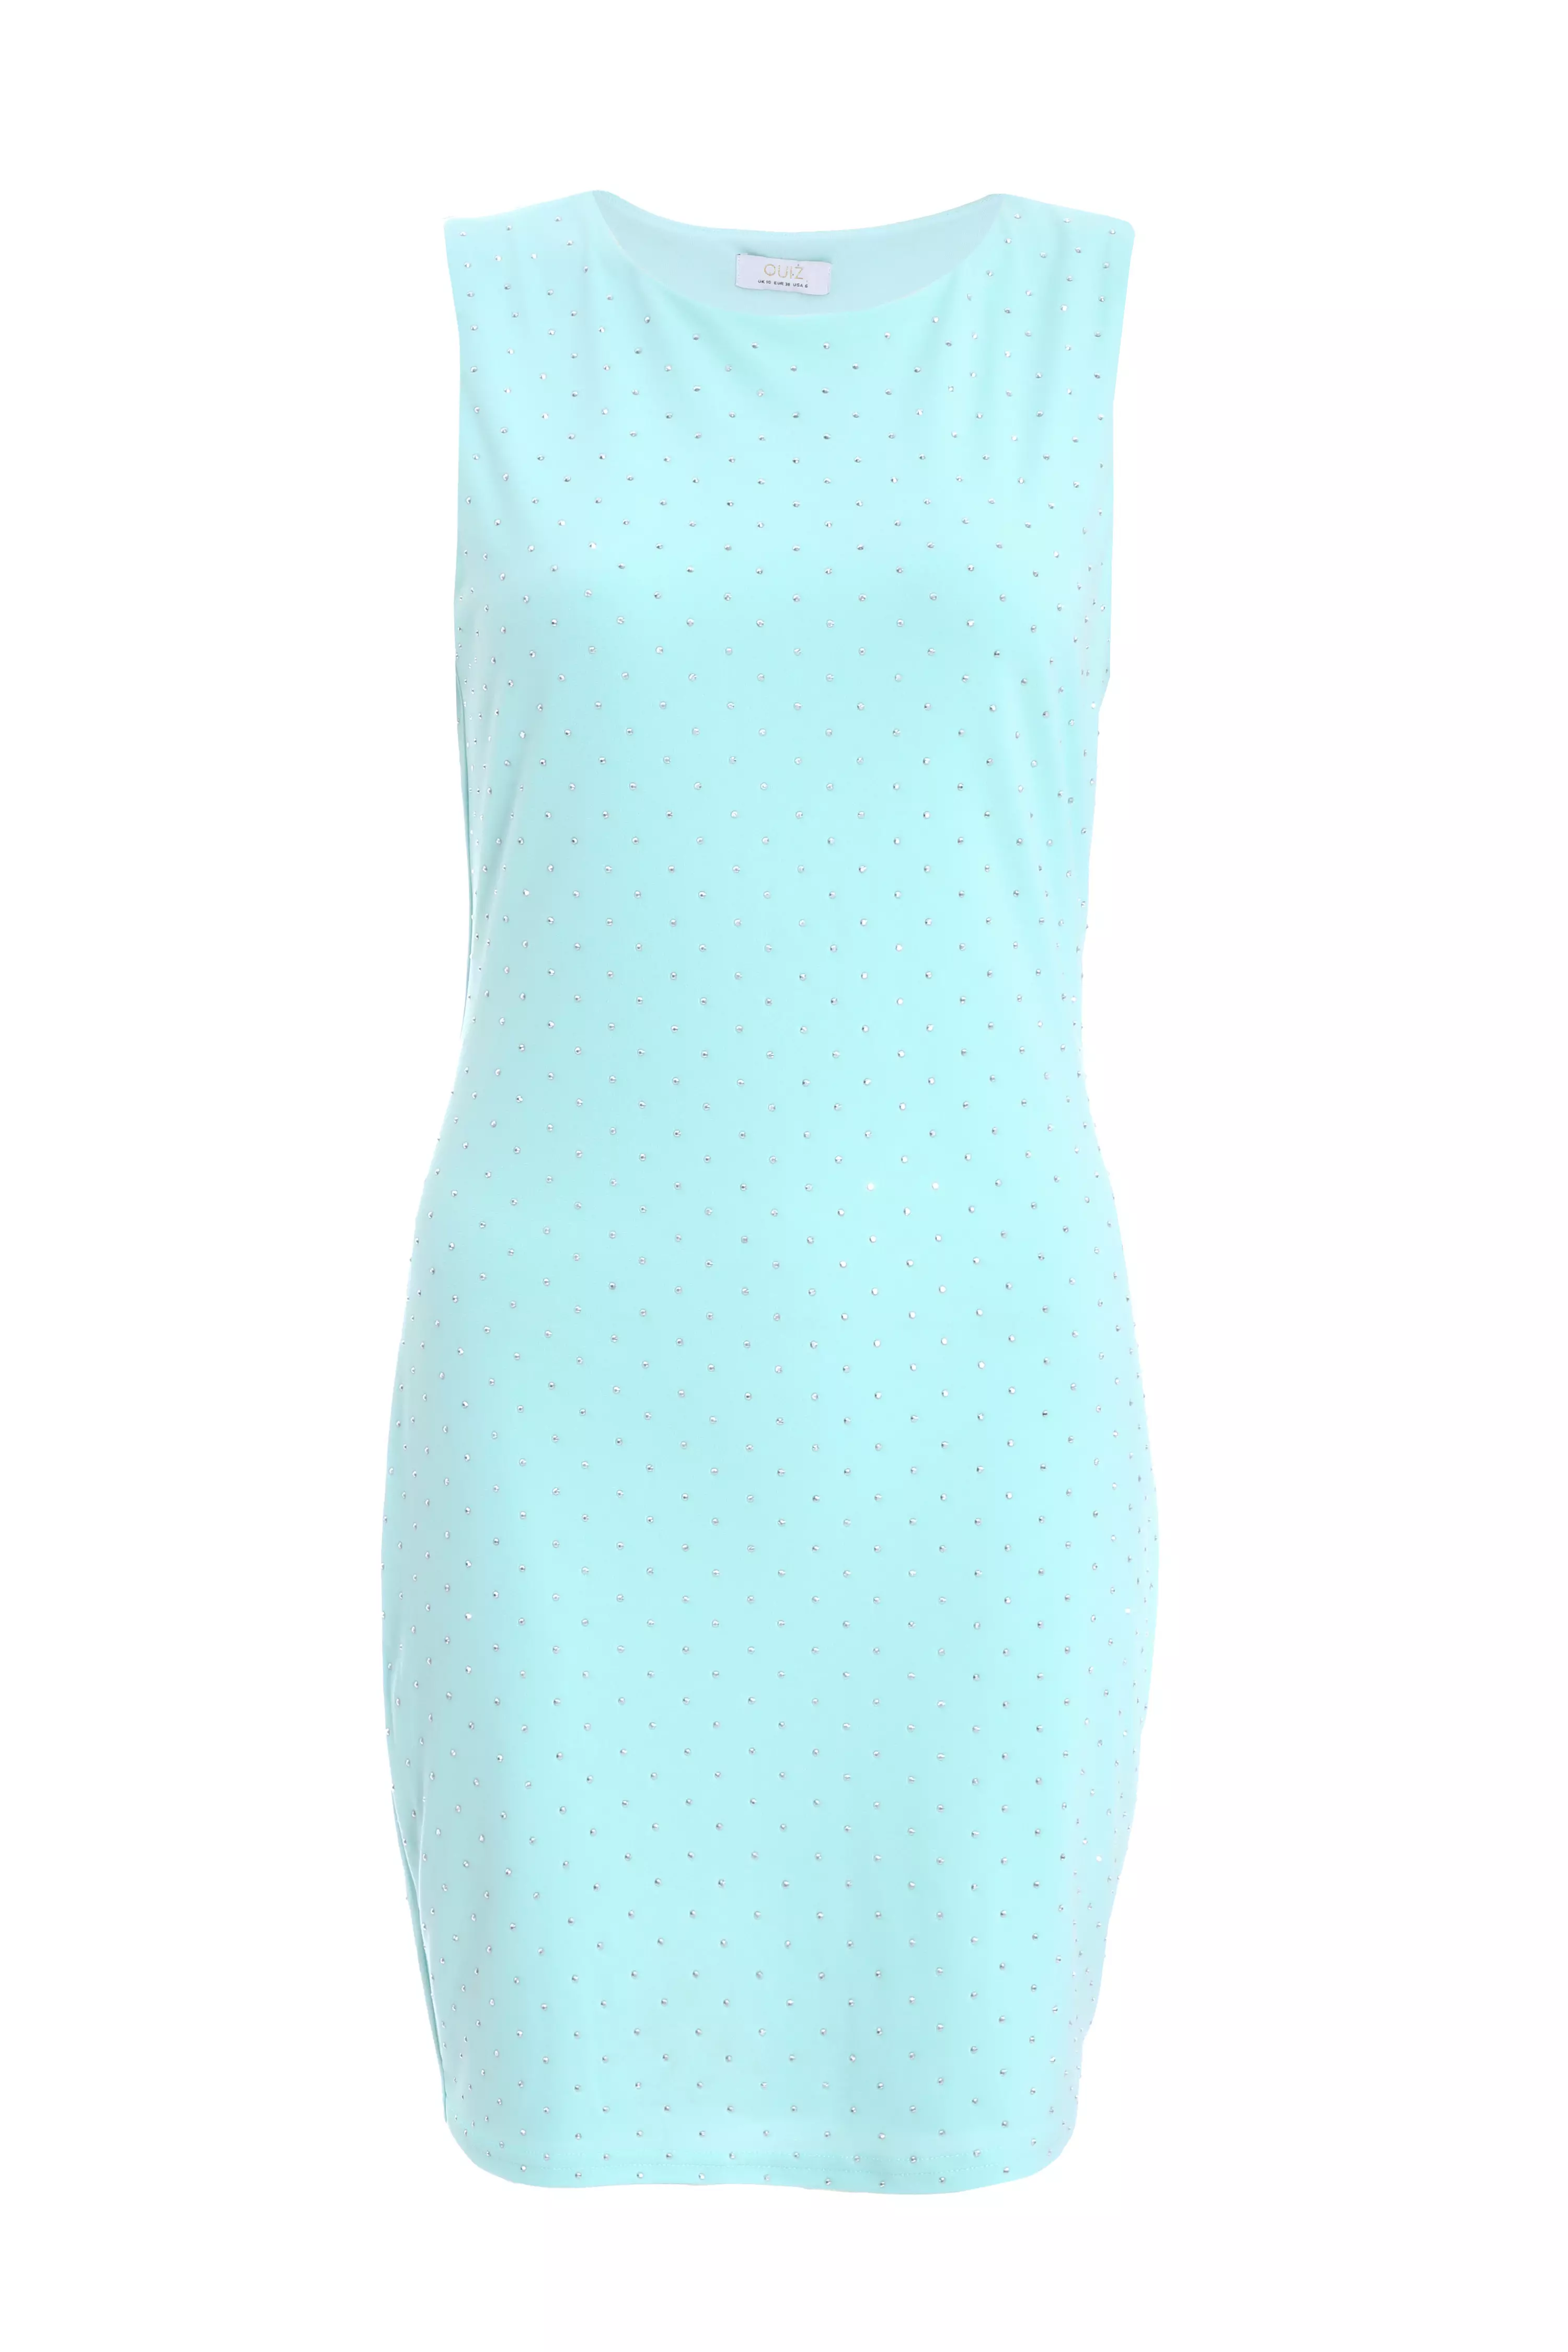 Blue Embellished Bodycon Mini Dress